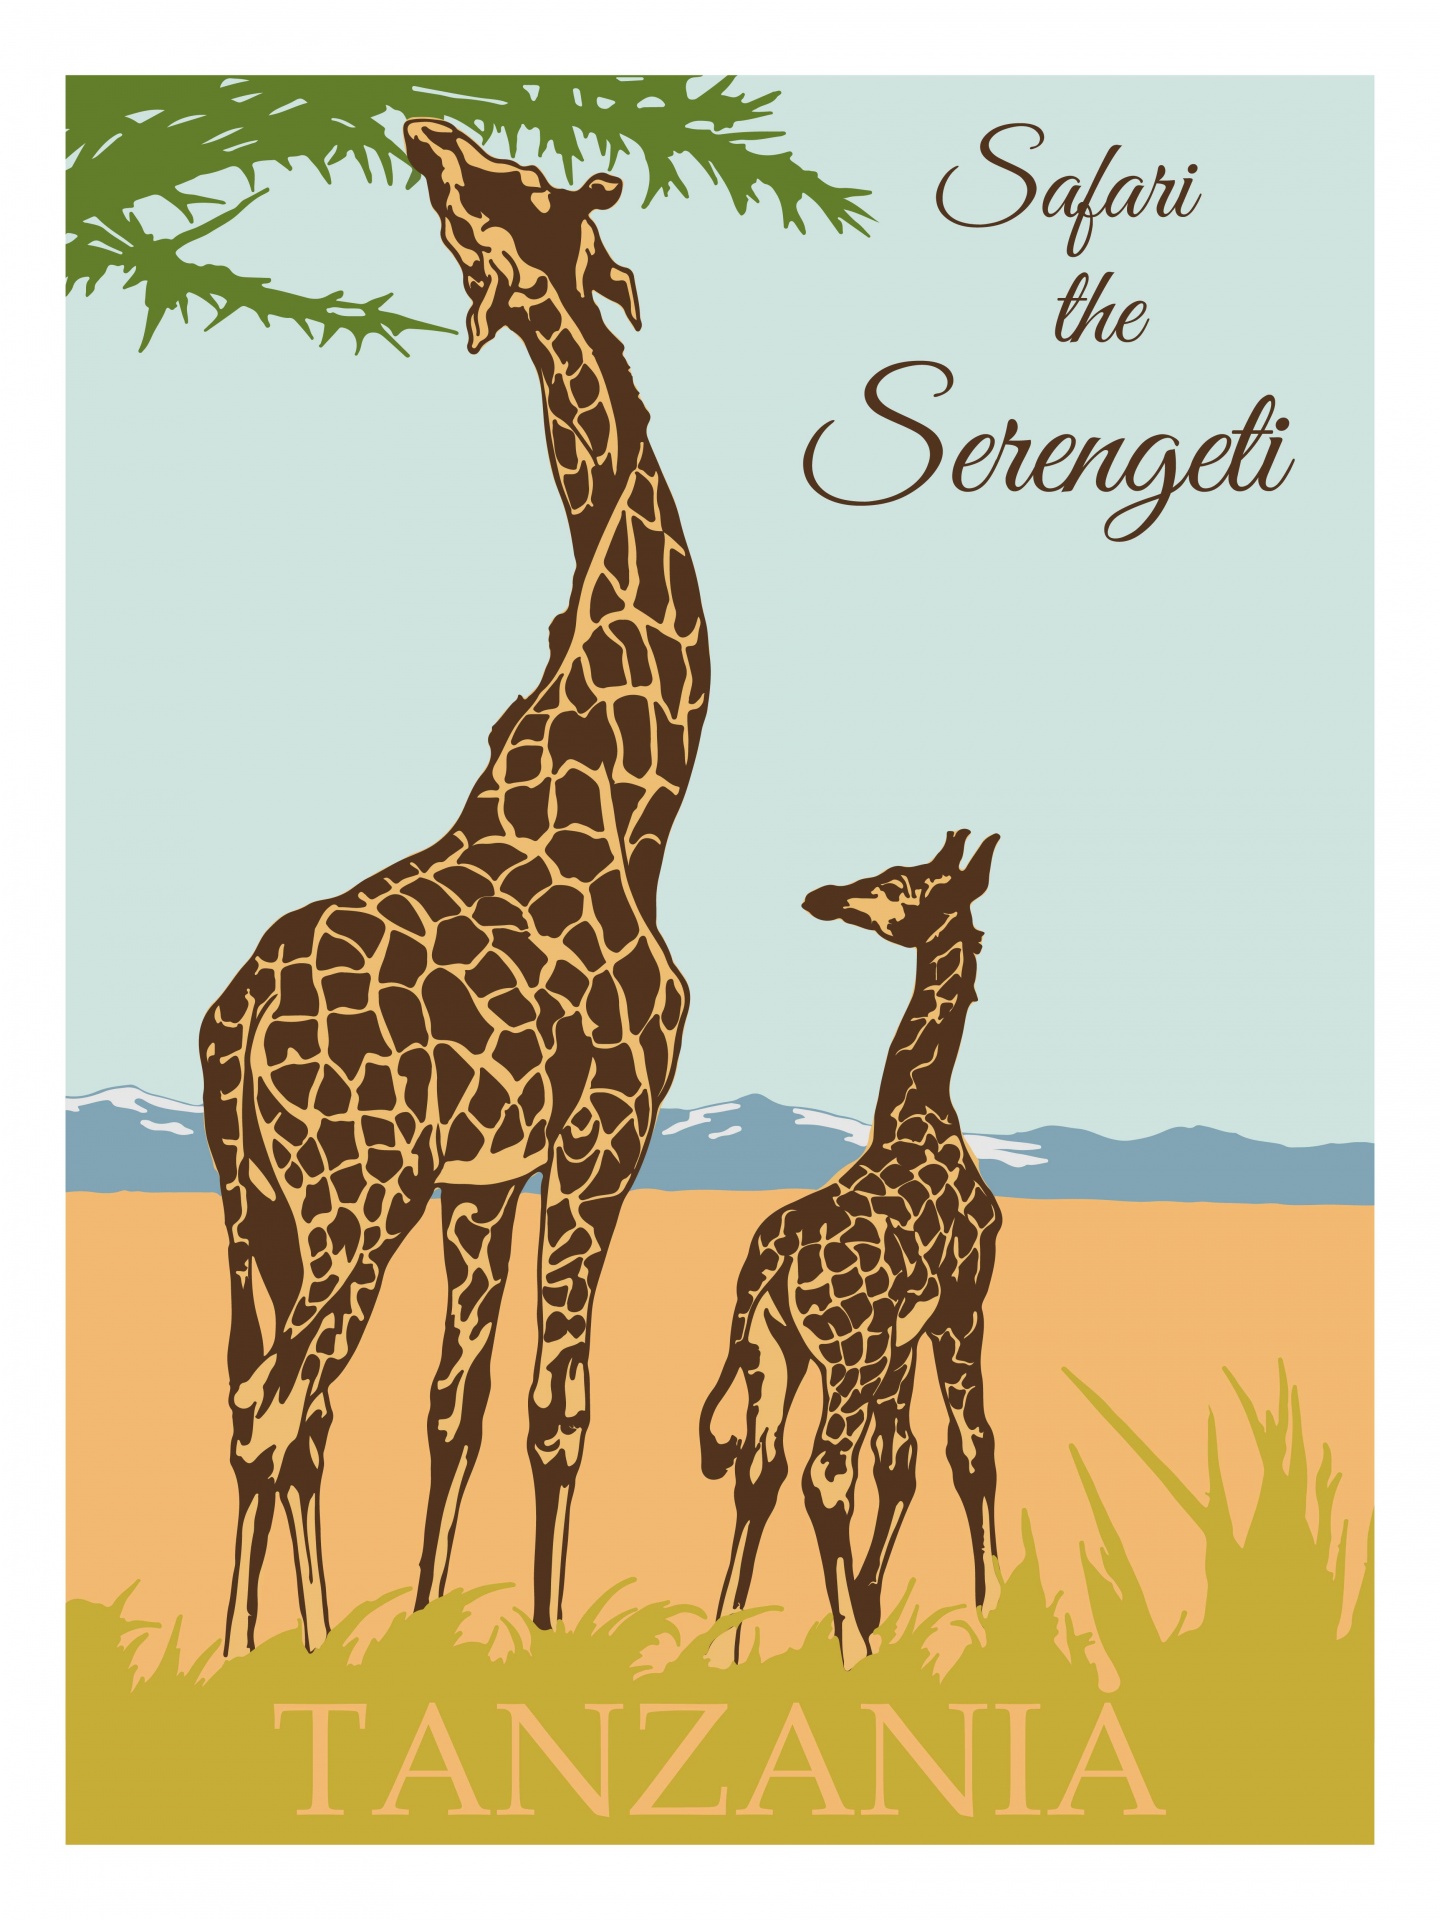 Tanzania, Serengeti Travel Poster